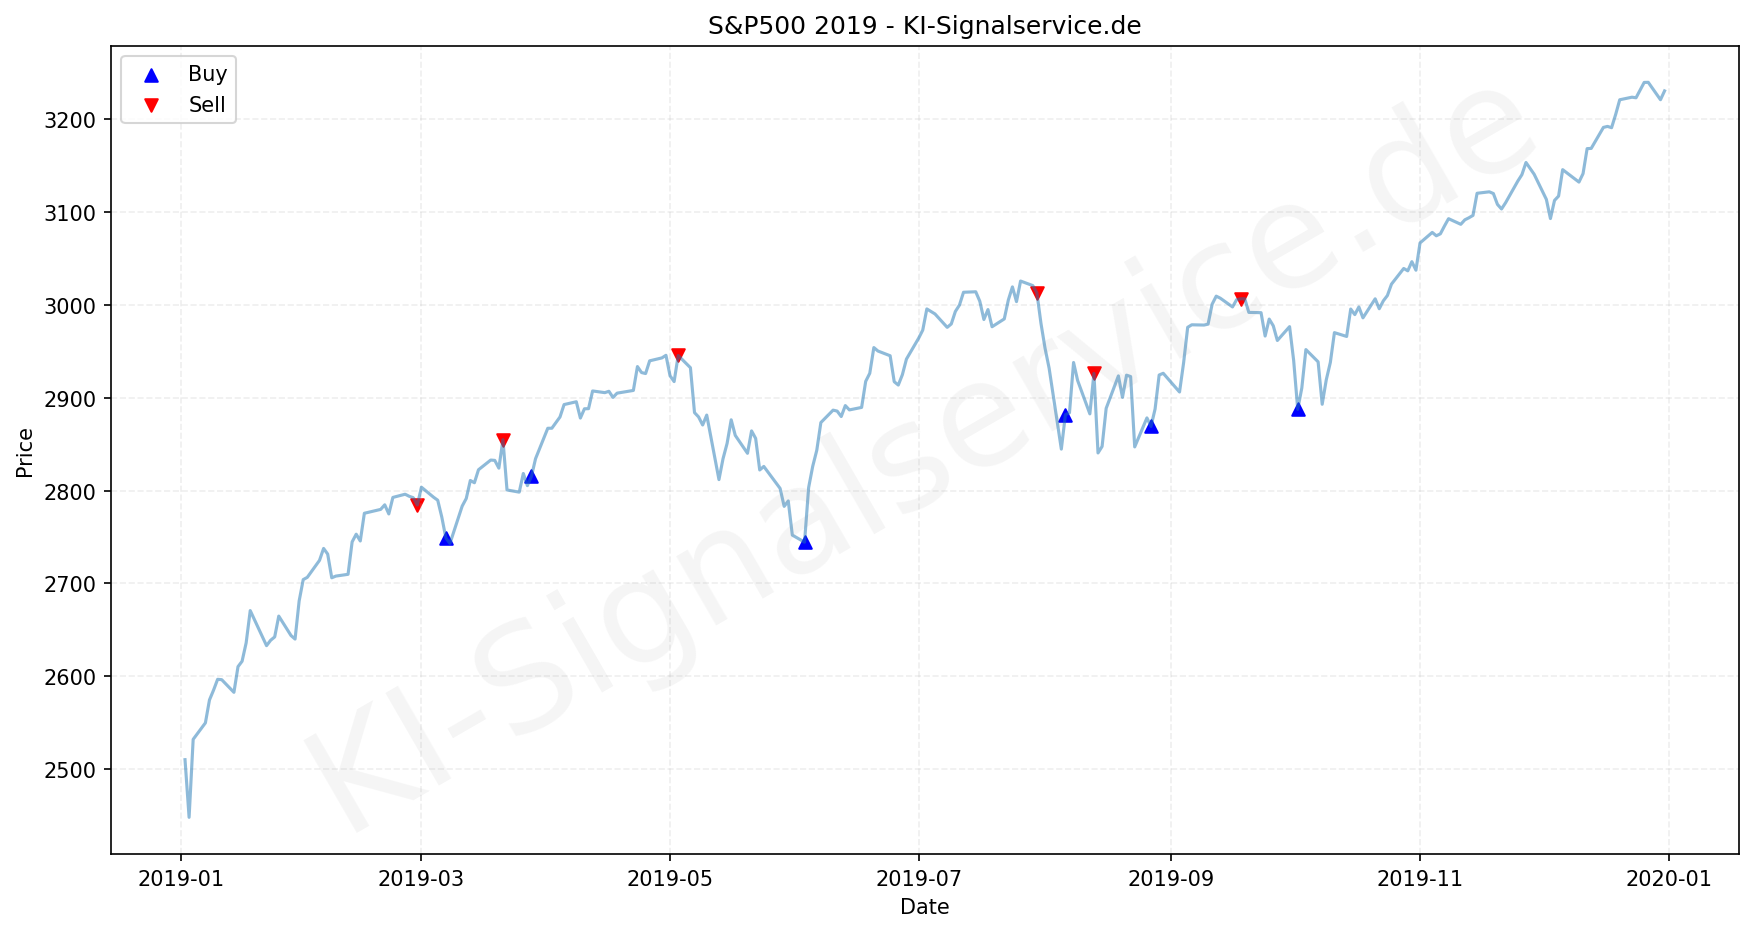 SP500 Index Performance Chart - KI Tradingsignale 2019